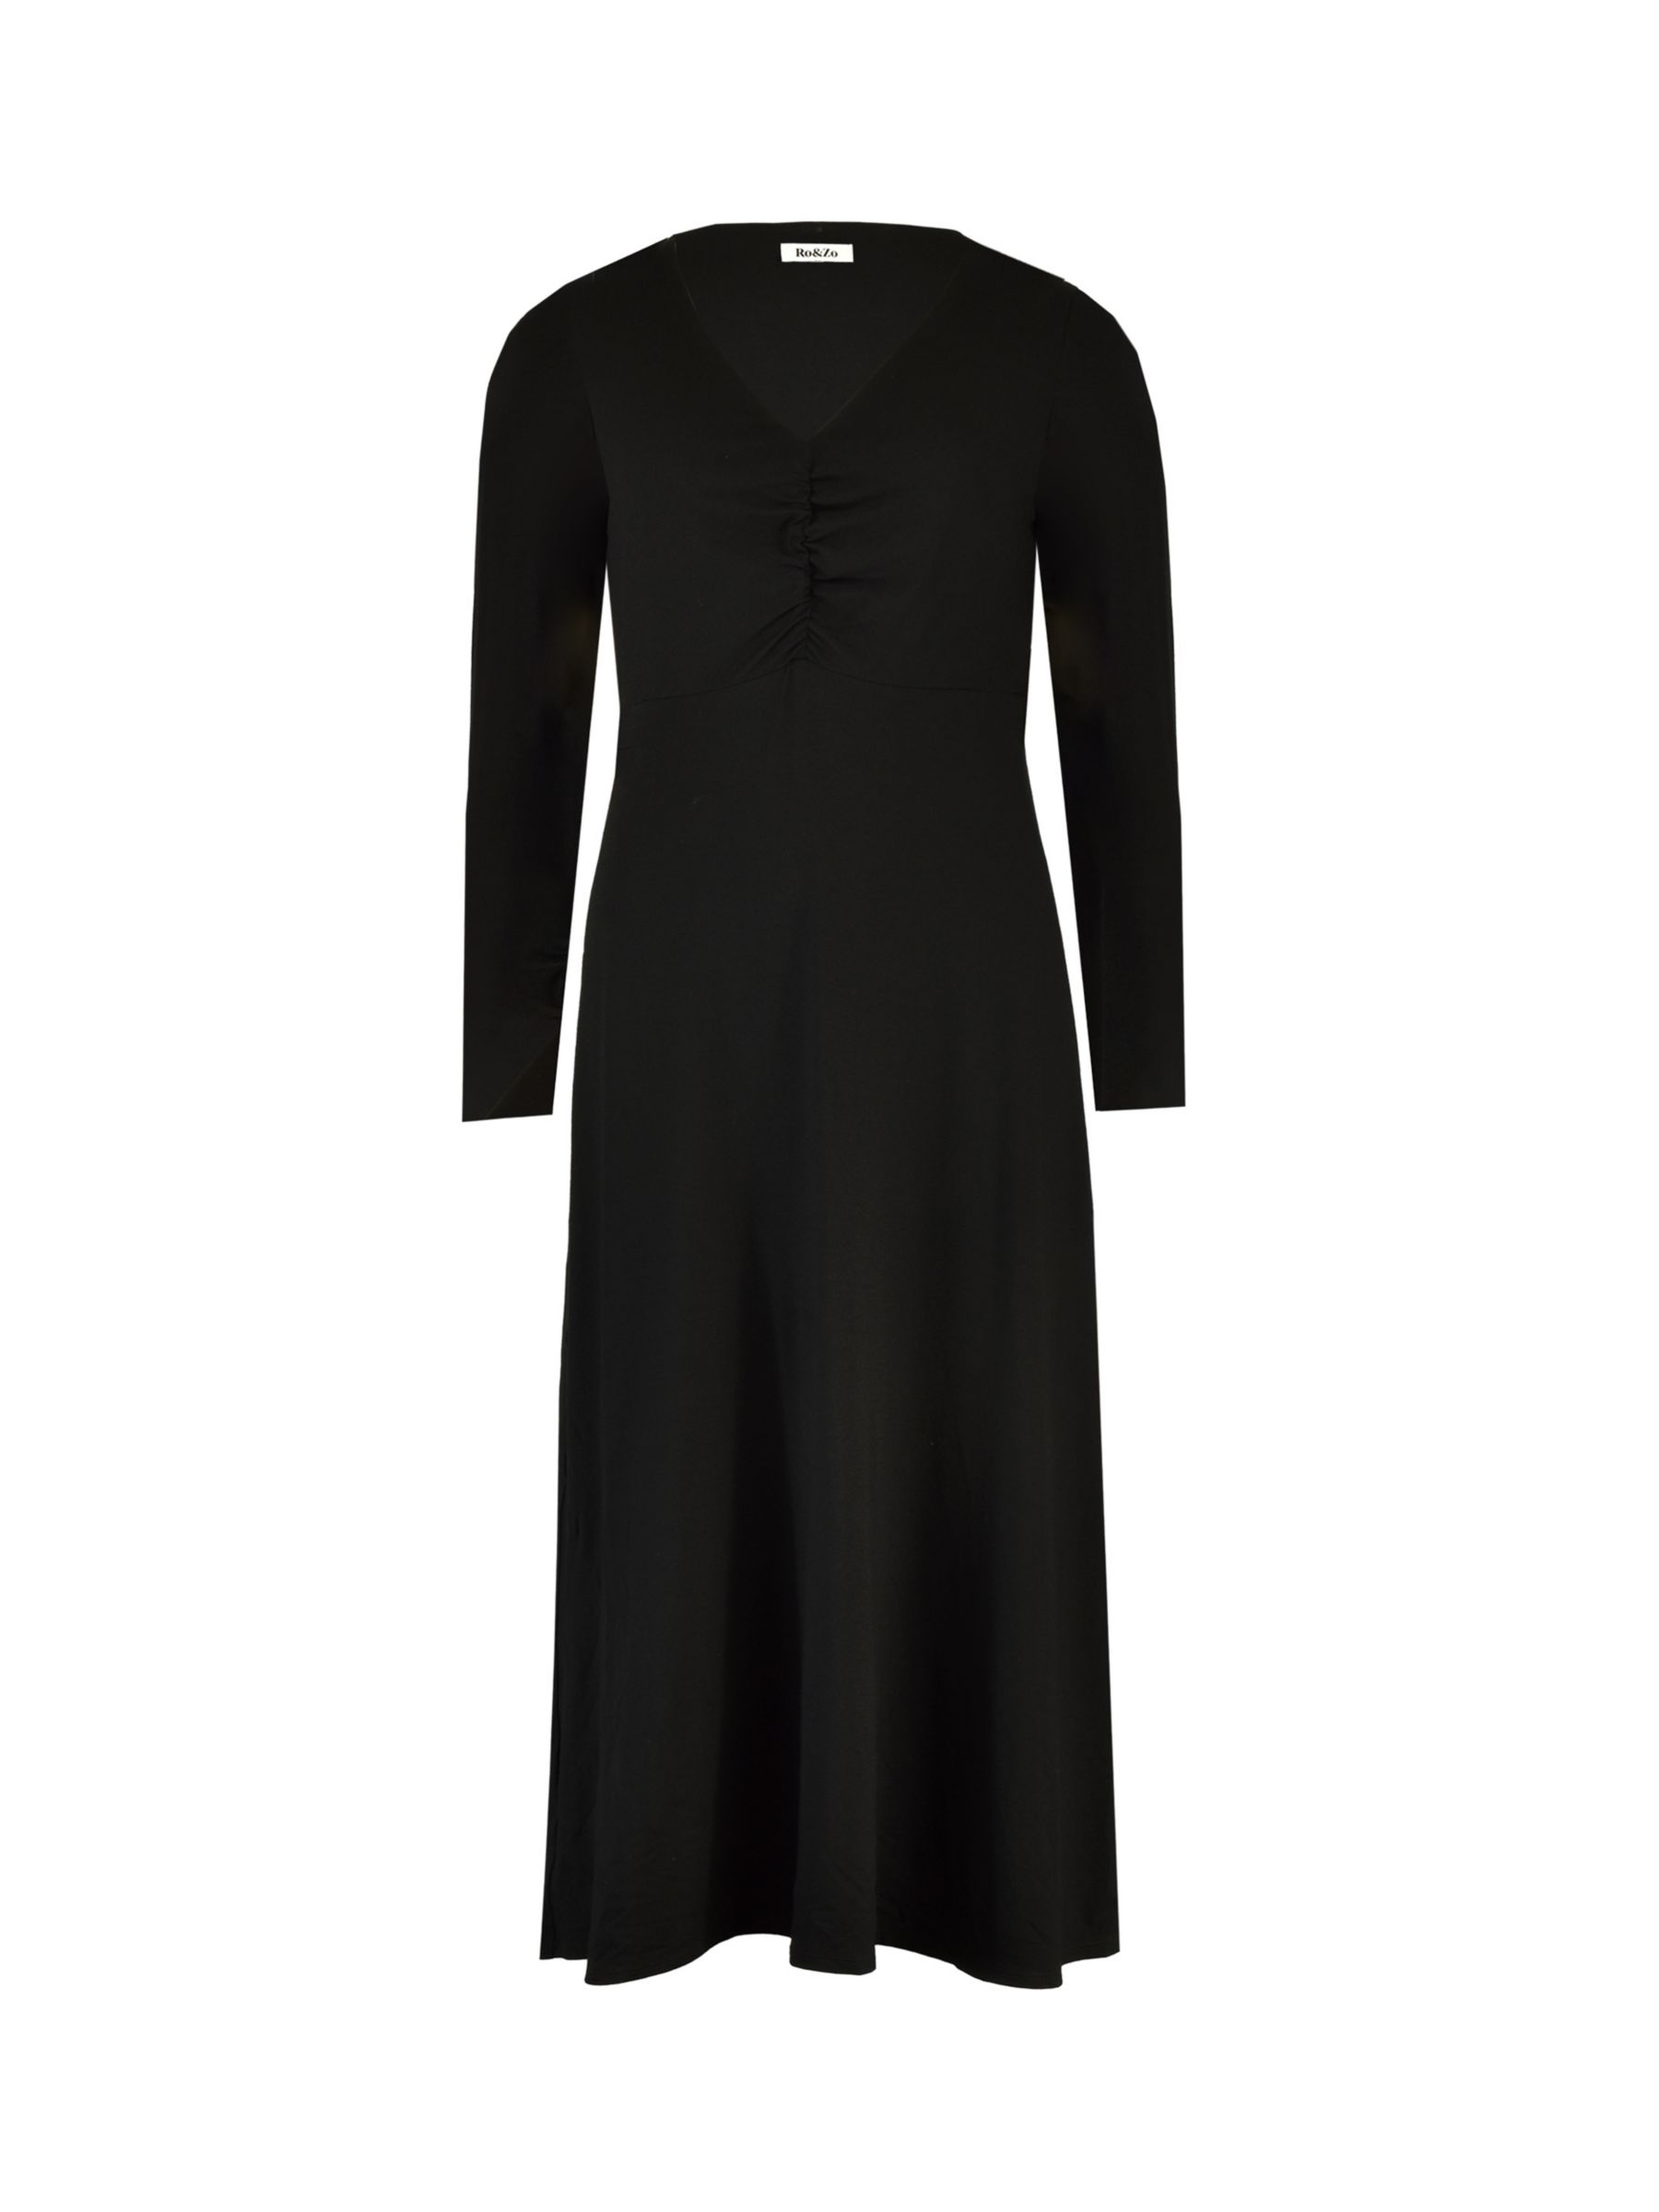 Ro&Zo Ruched Front Midi Dress, Black at John Lewis & Partners